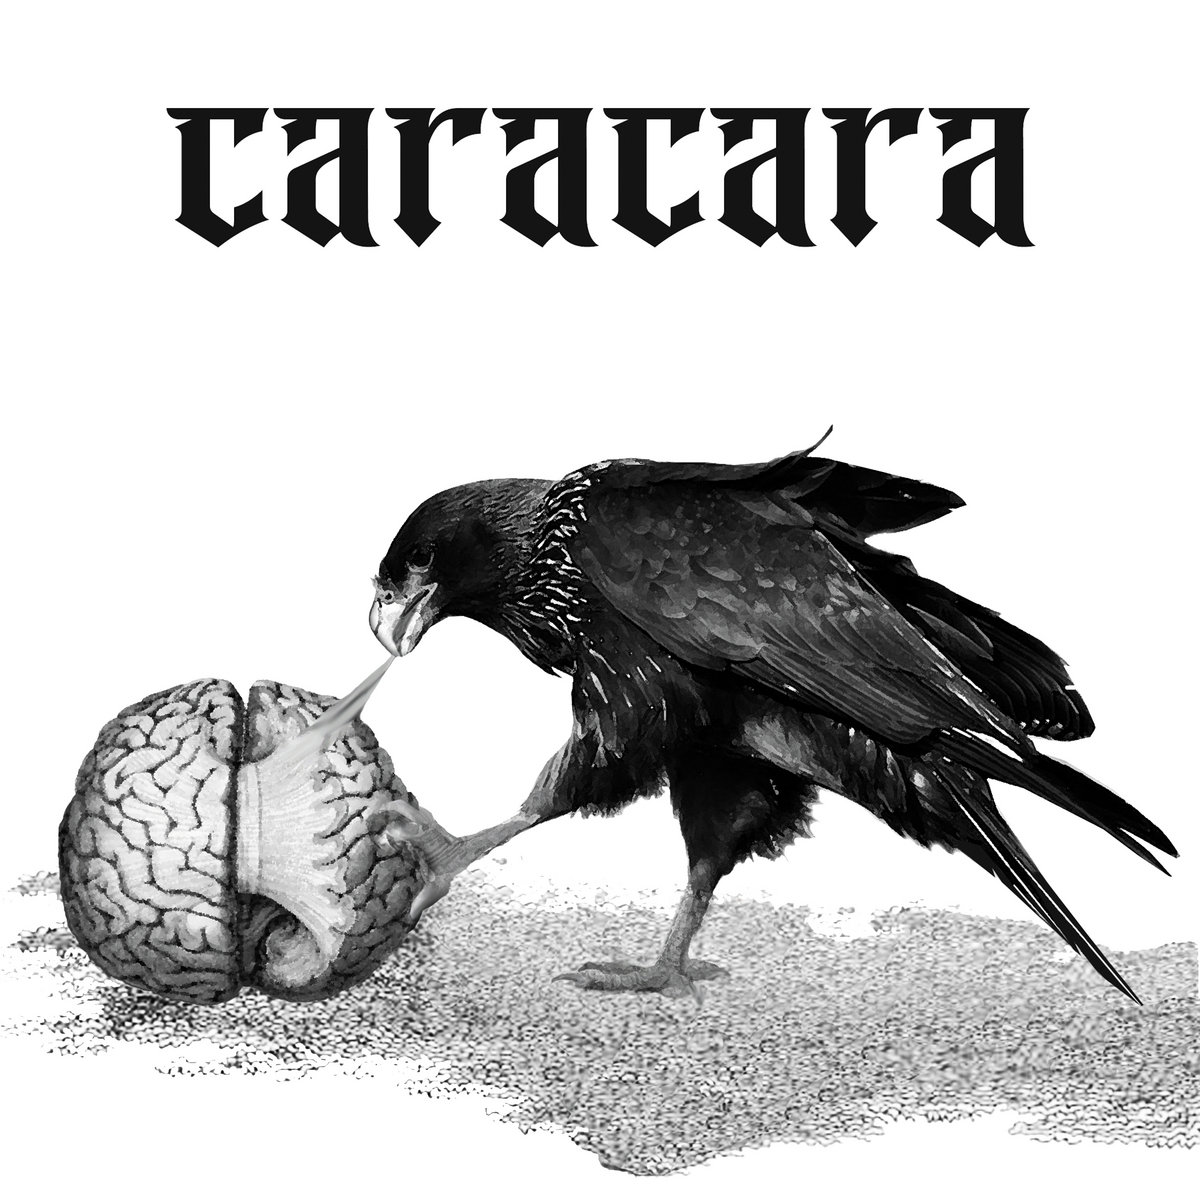 Caracara - "Vagrant Witness Cantos" - 2022